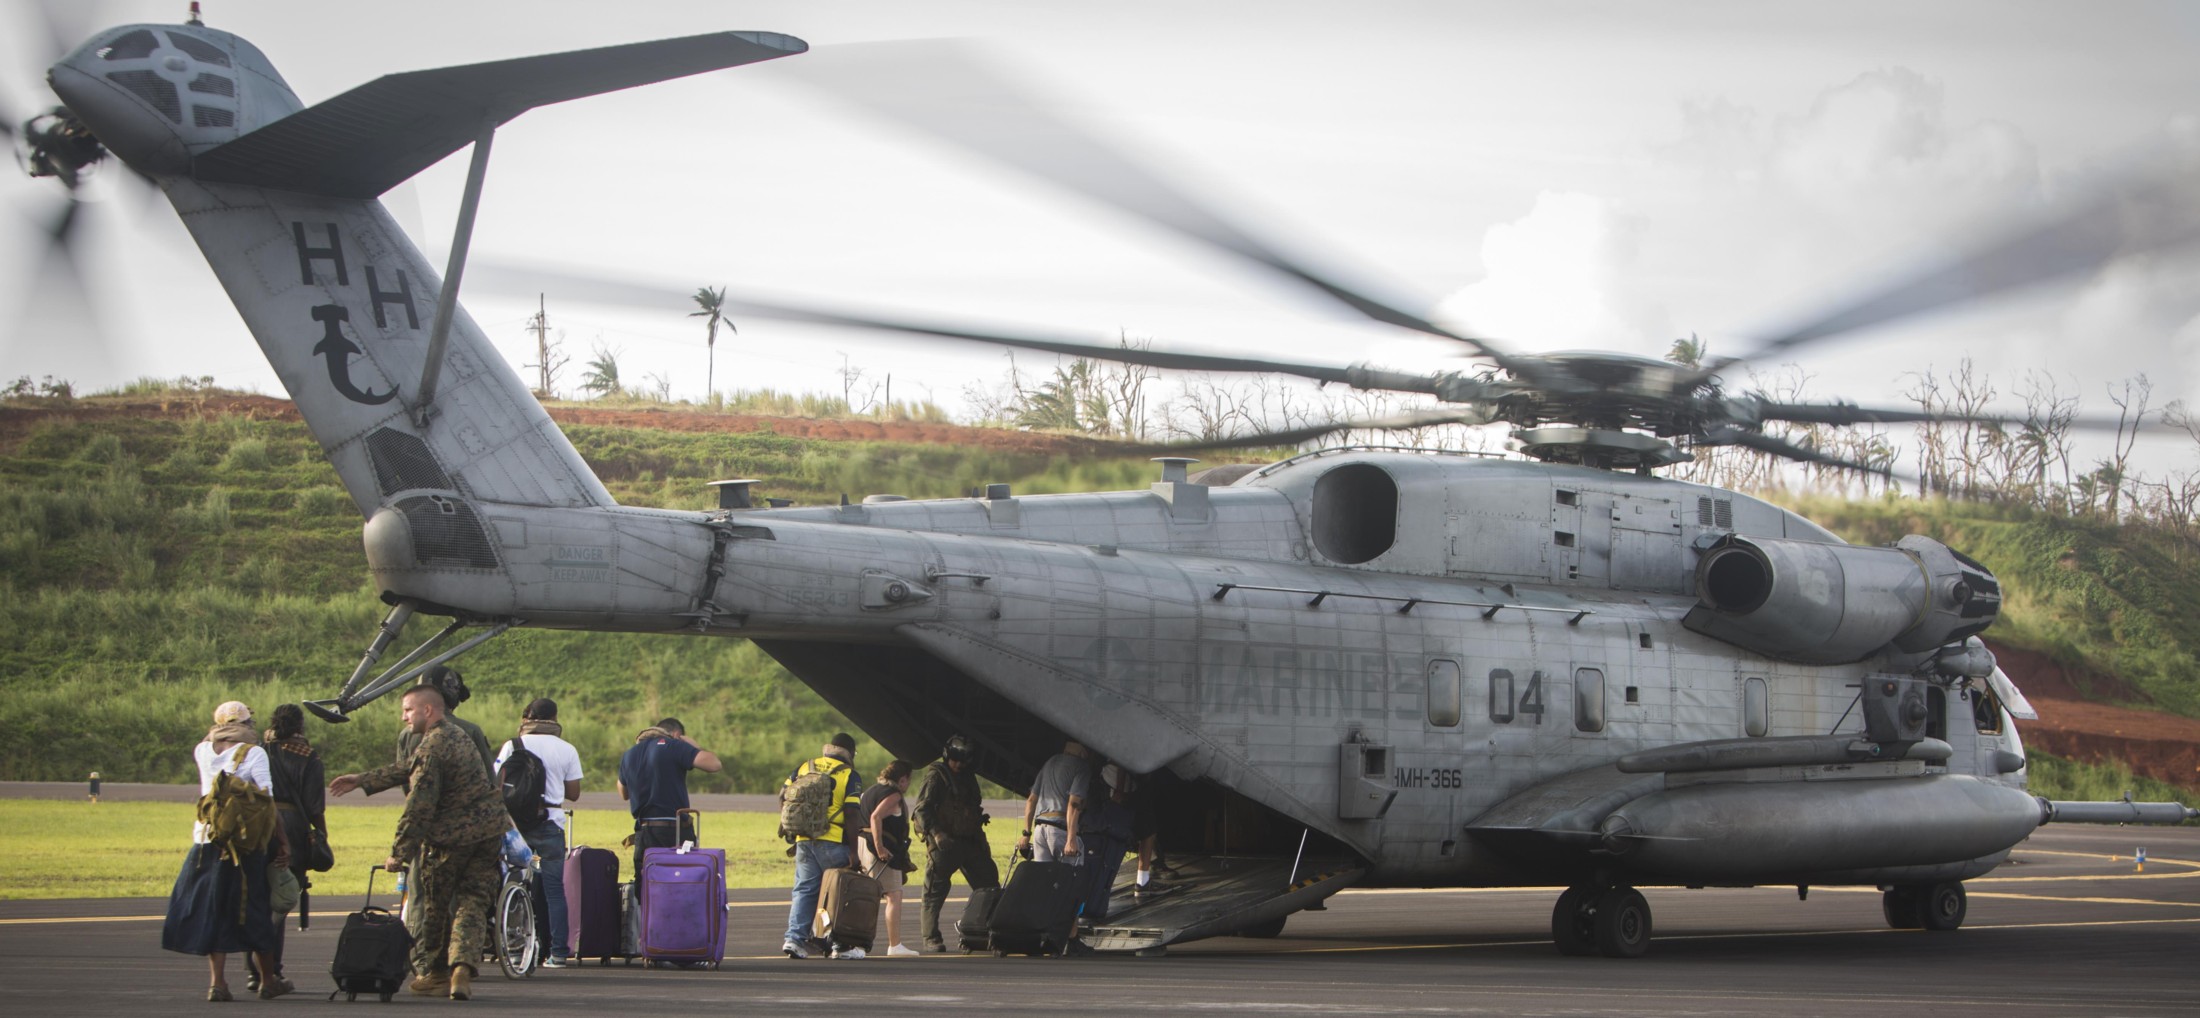 hmh-366 hammerheads ch-53e super stallion marine heavy helicopter squadron douglas charles airport dominica 130